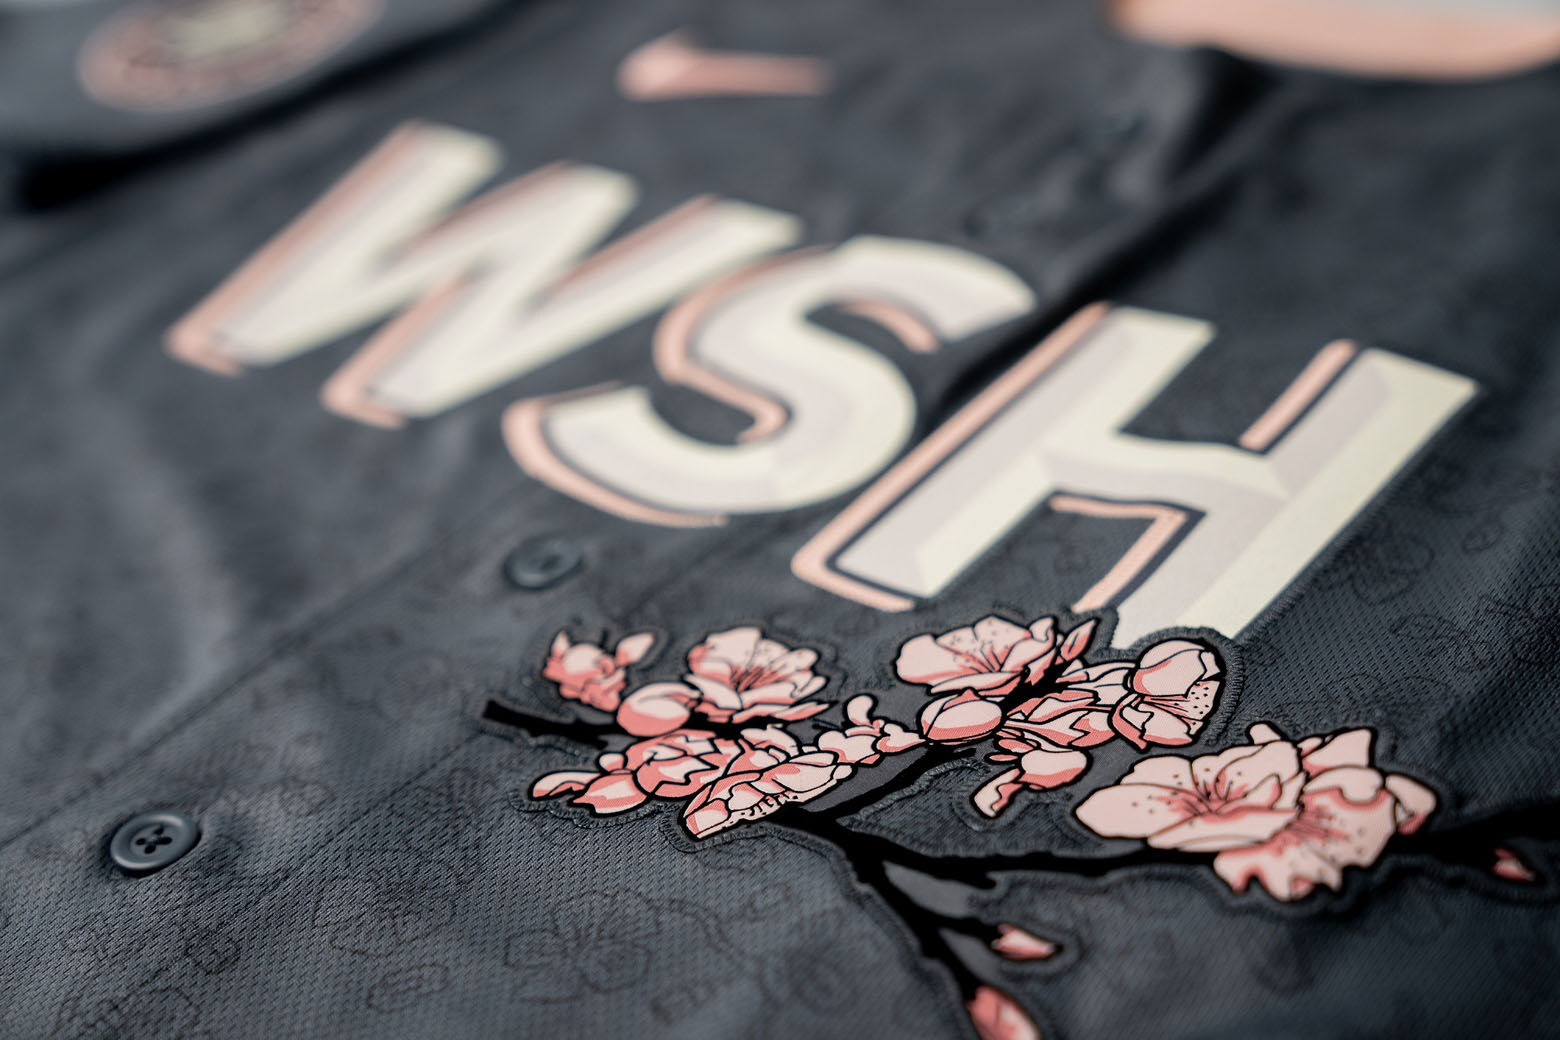 cherry blossom jersey design